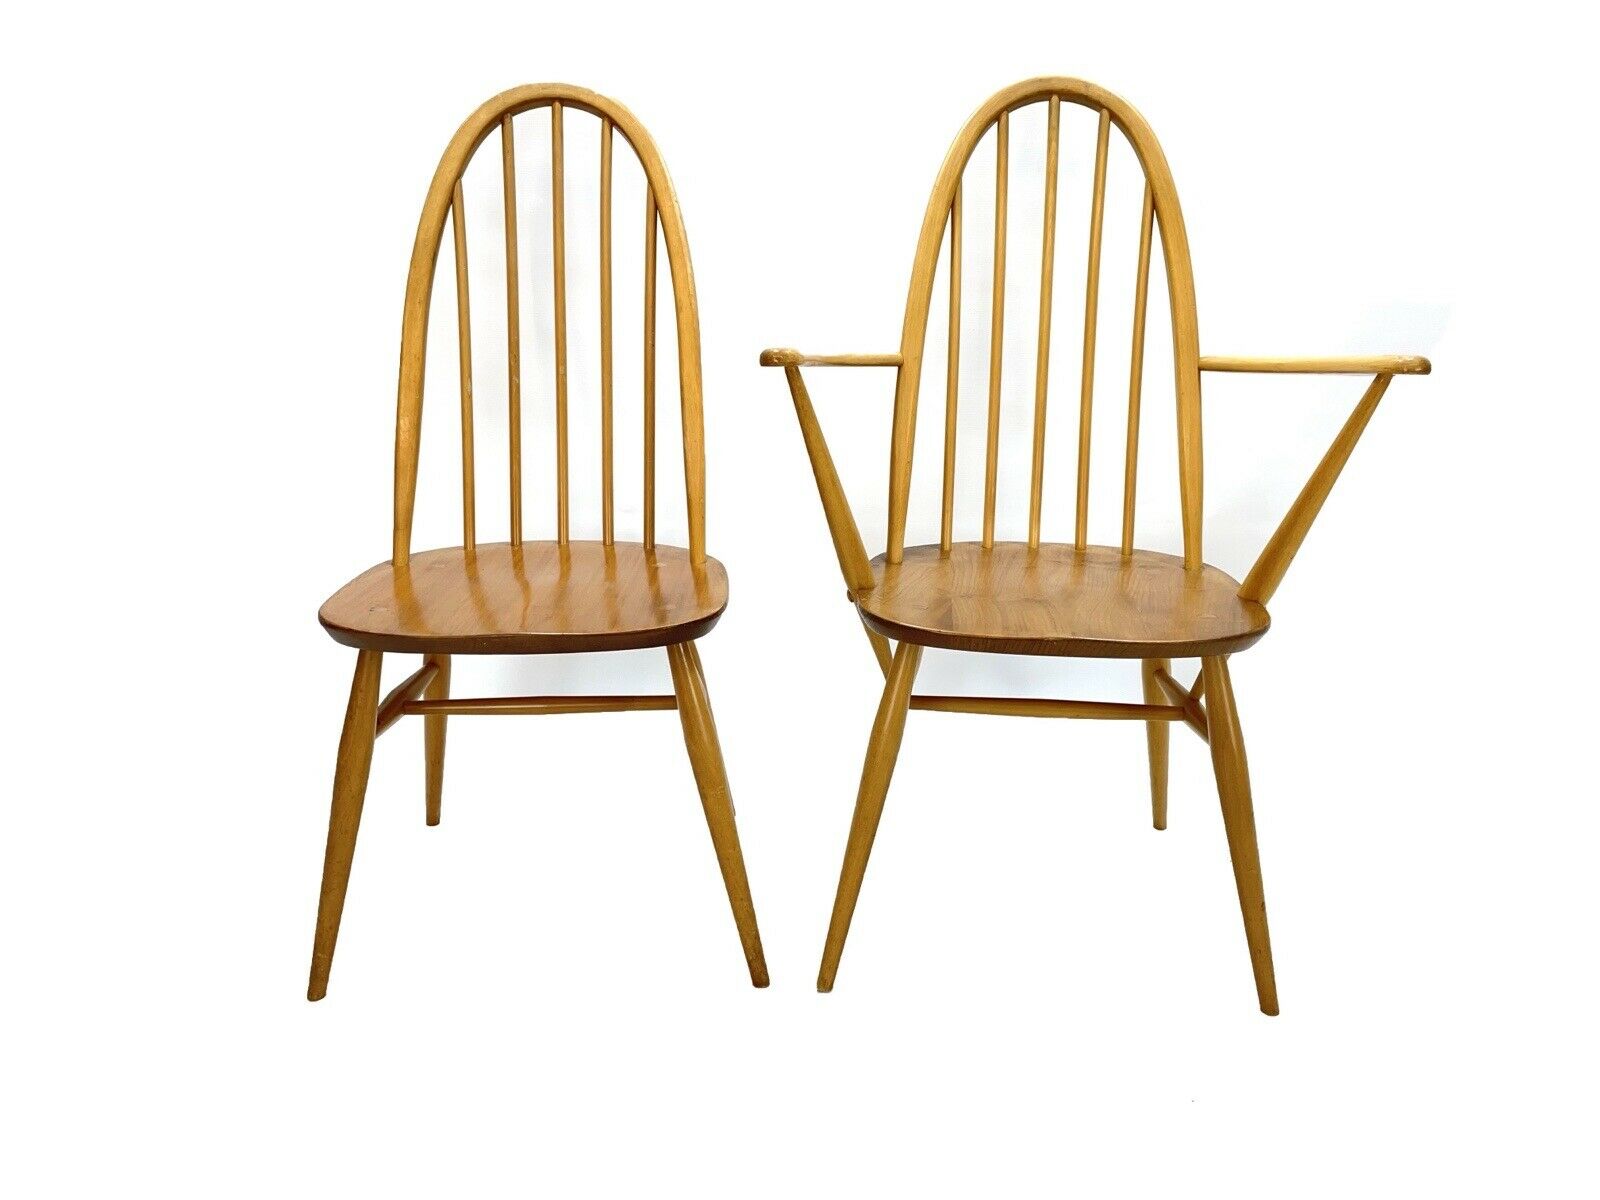 Ercol Quaker 365 & 365a, Set Of 4 Retro Dining Chairs